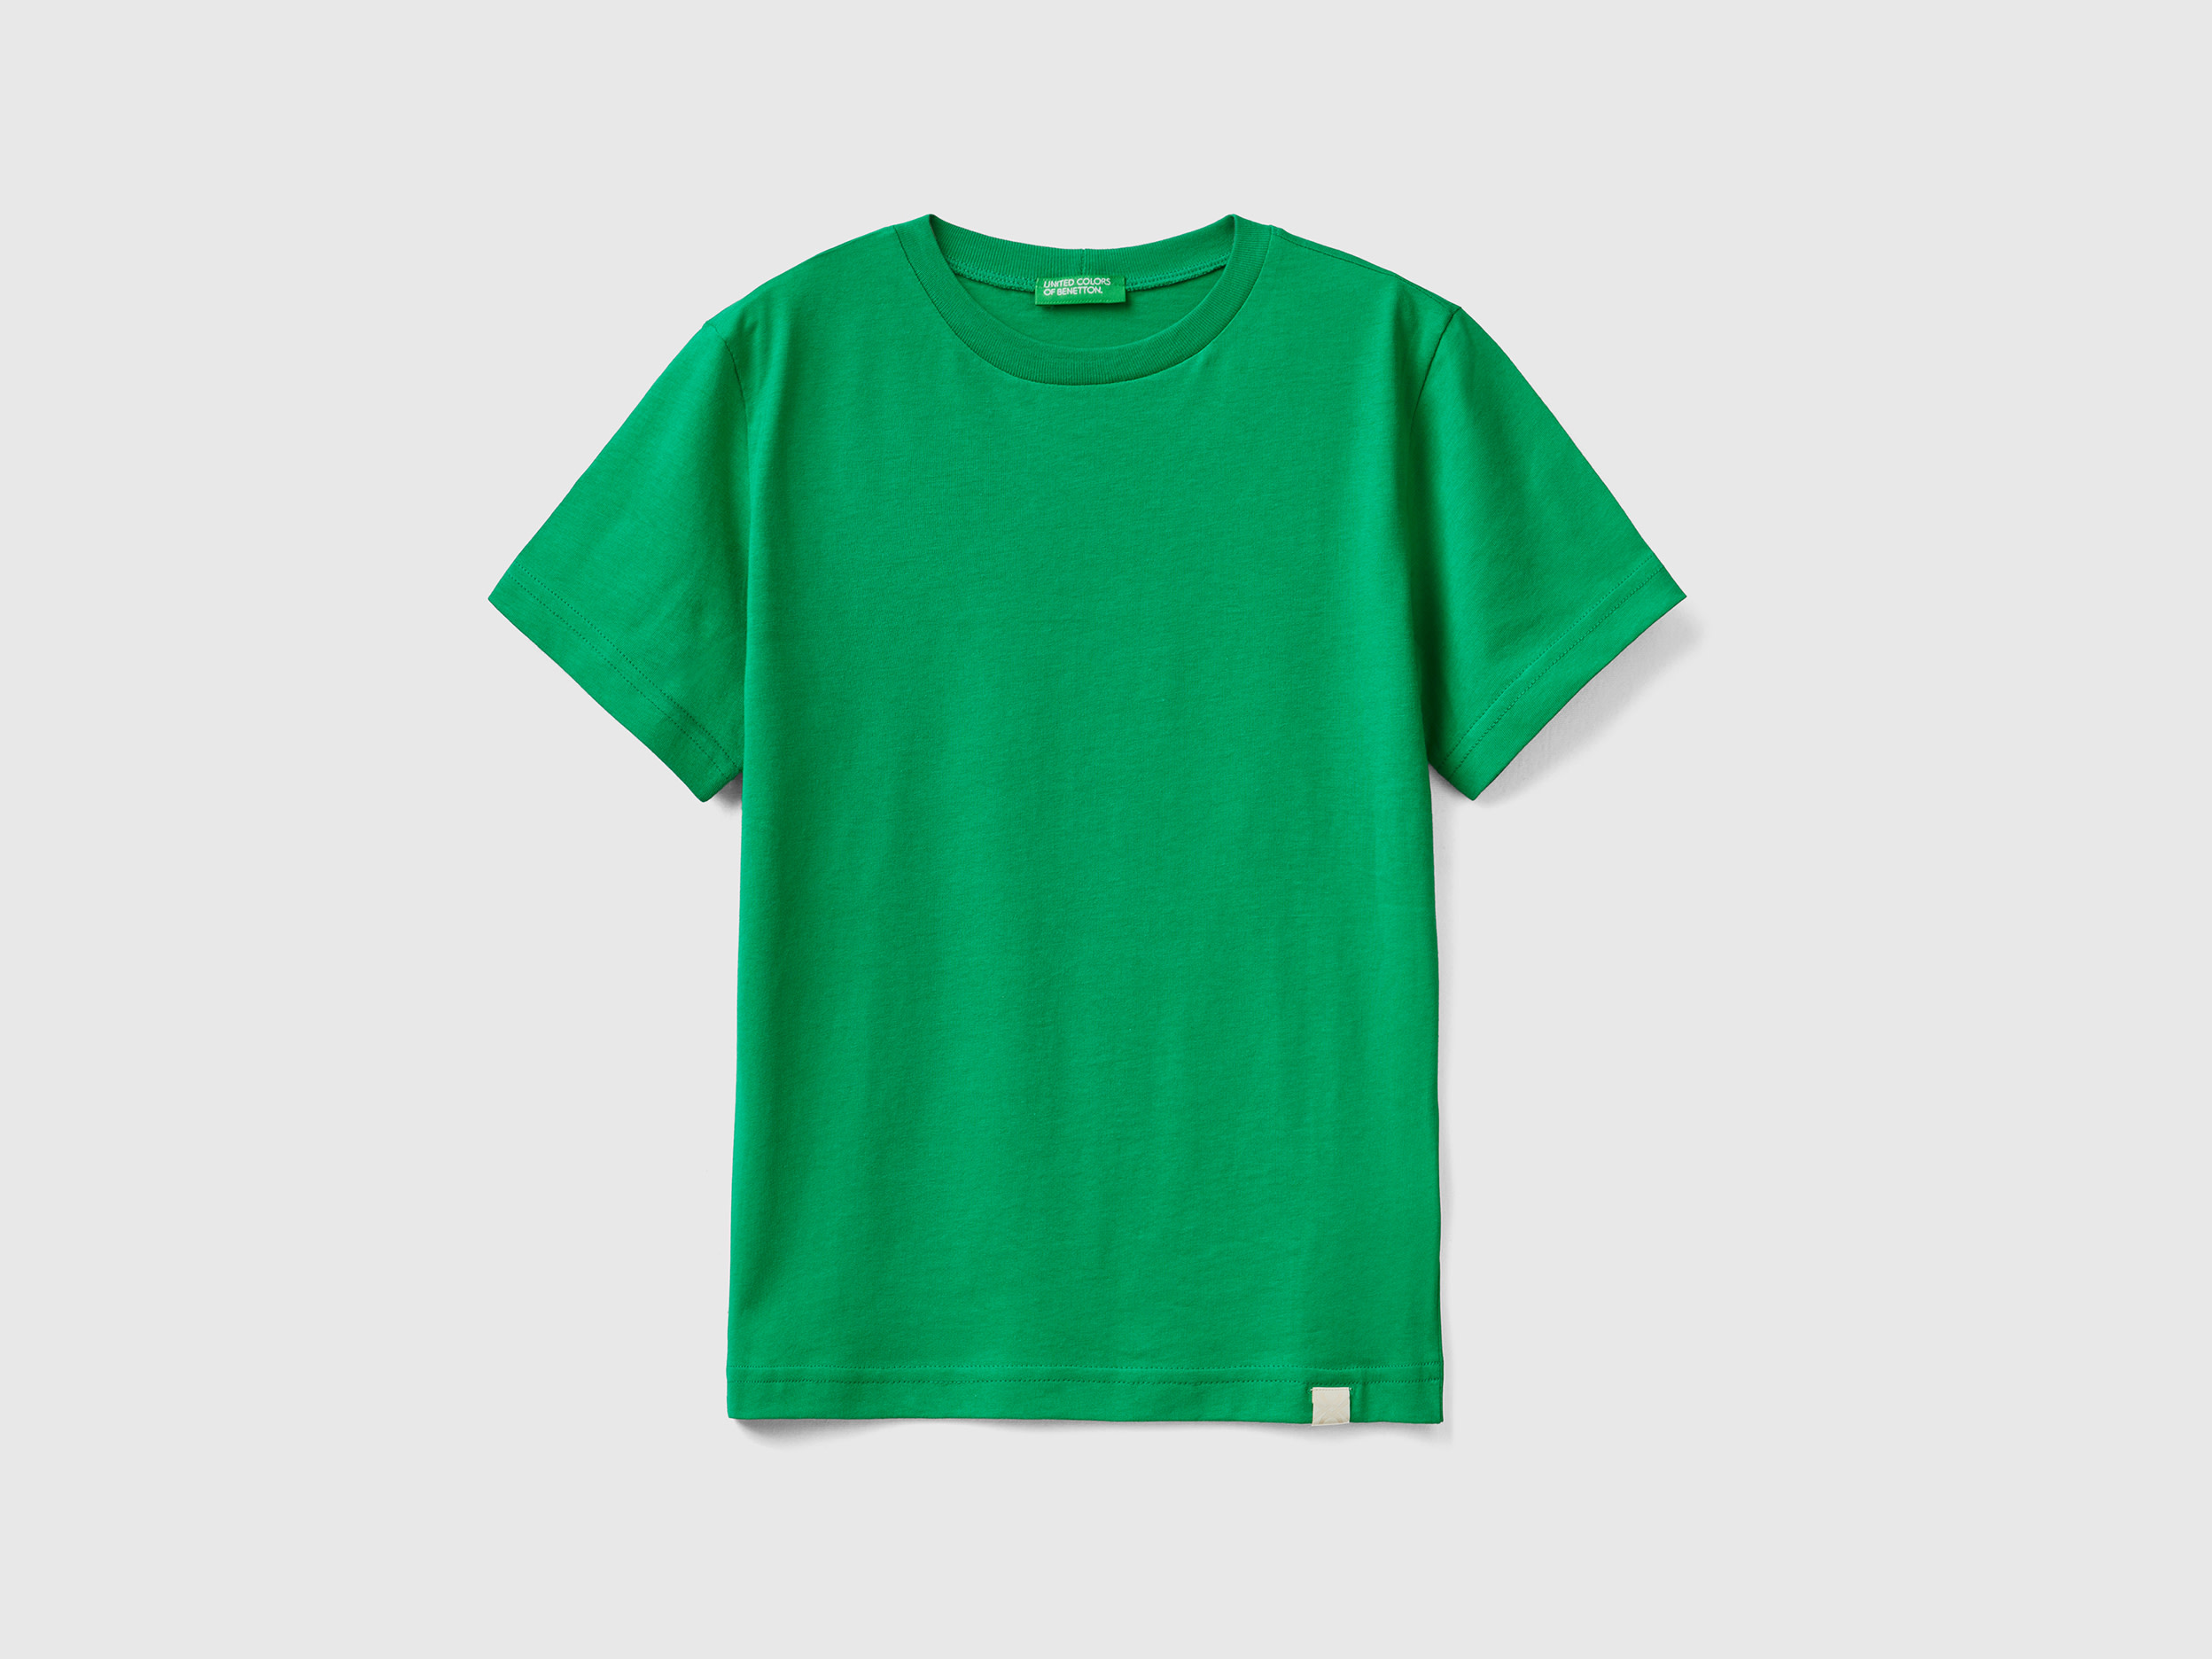 Benetton, Organic Cotton T-shirt, size 2XL, Green, Kids